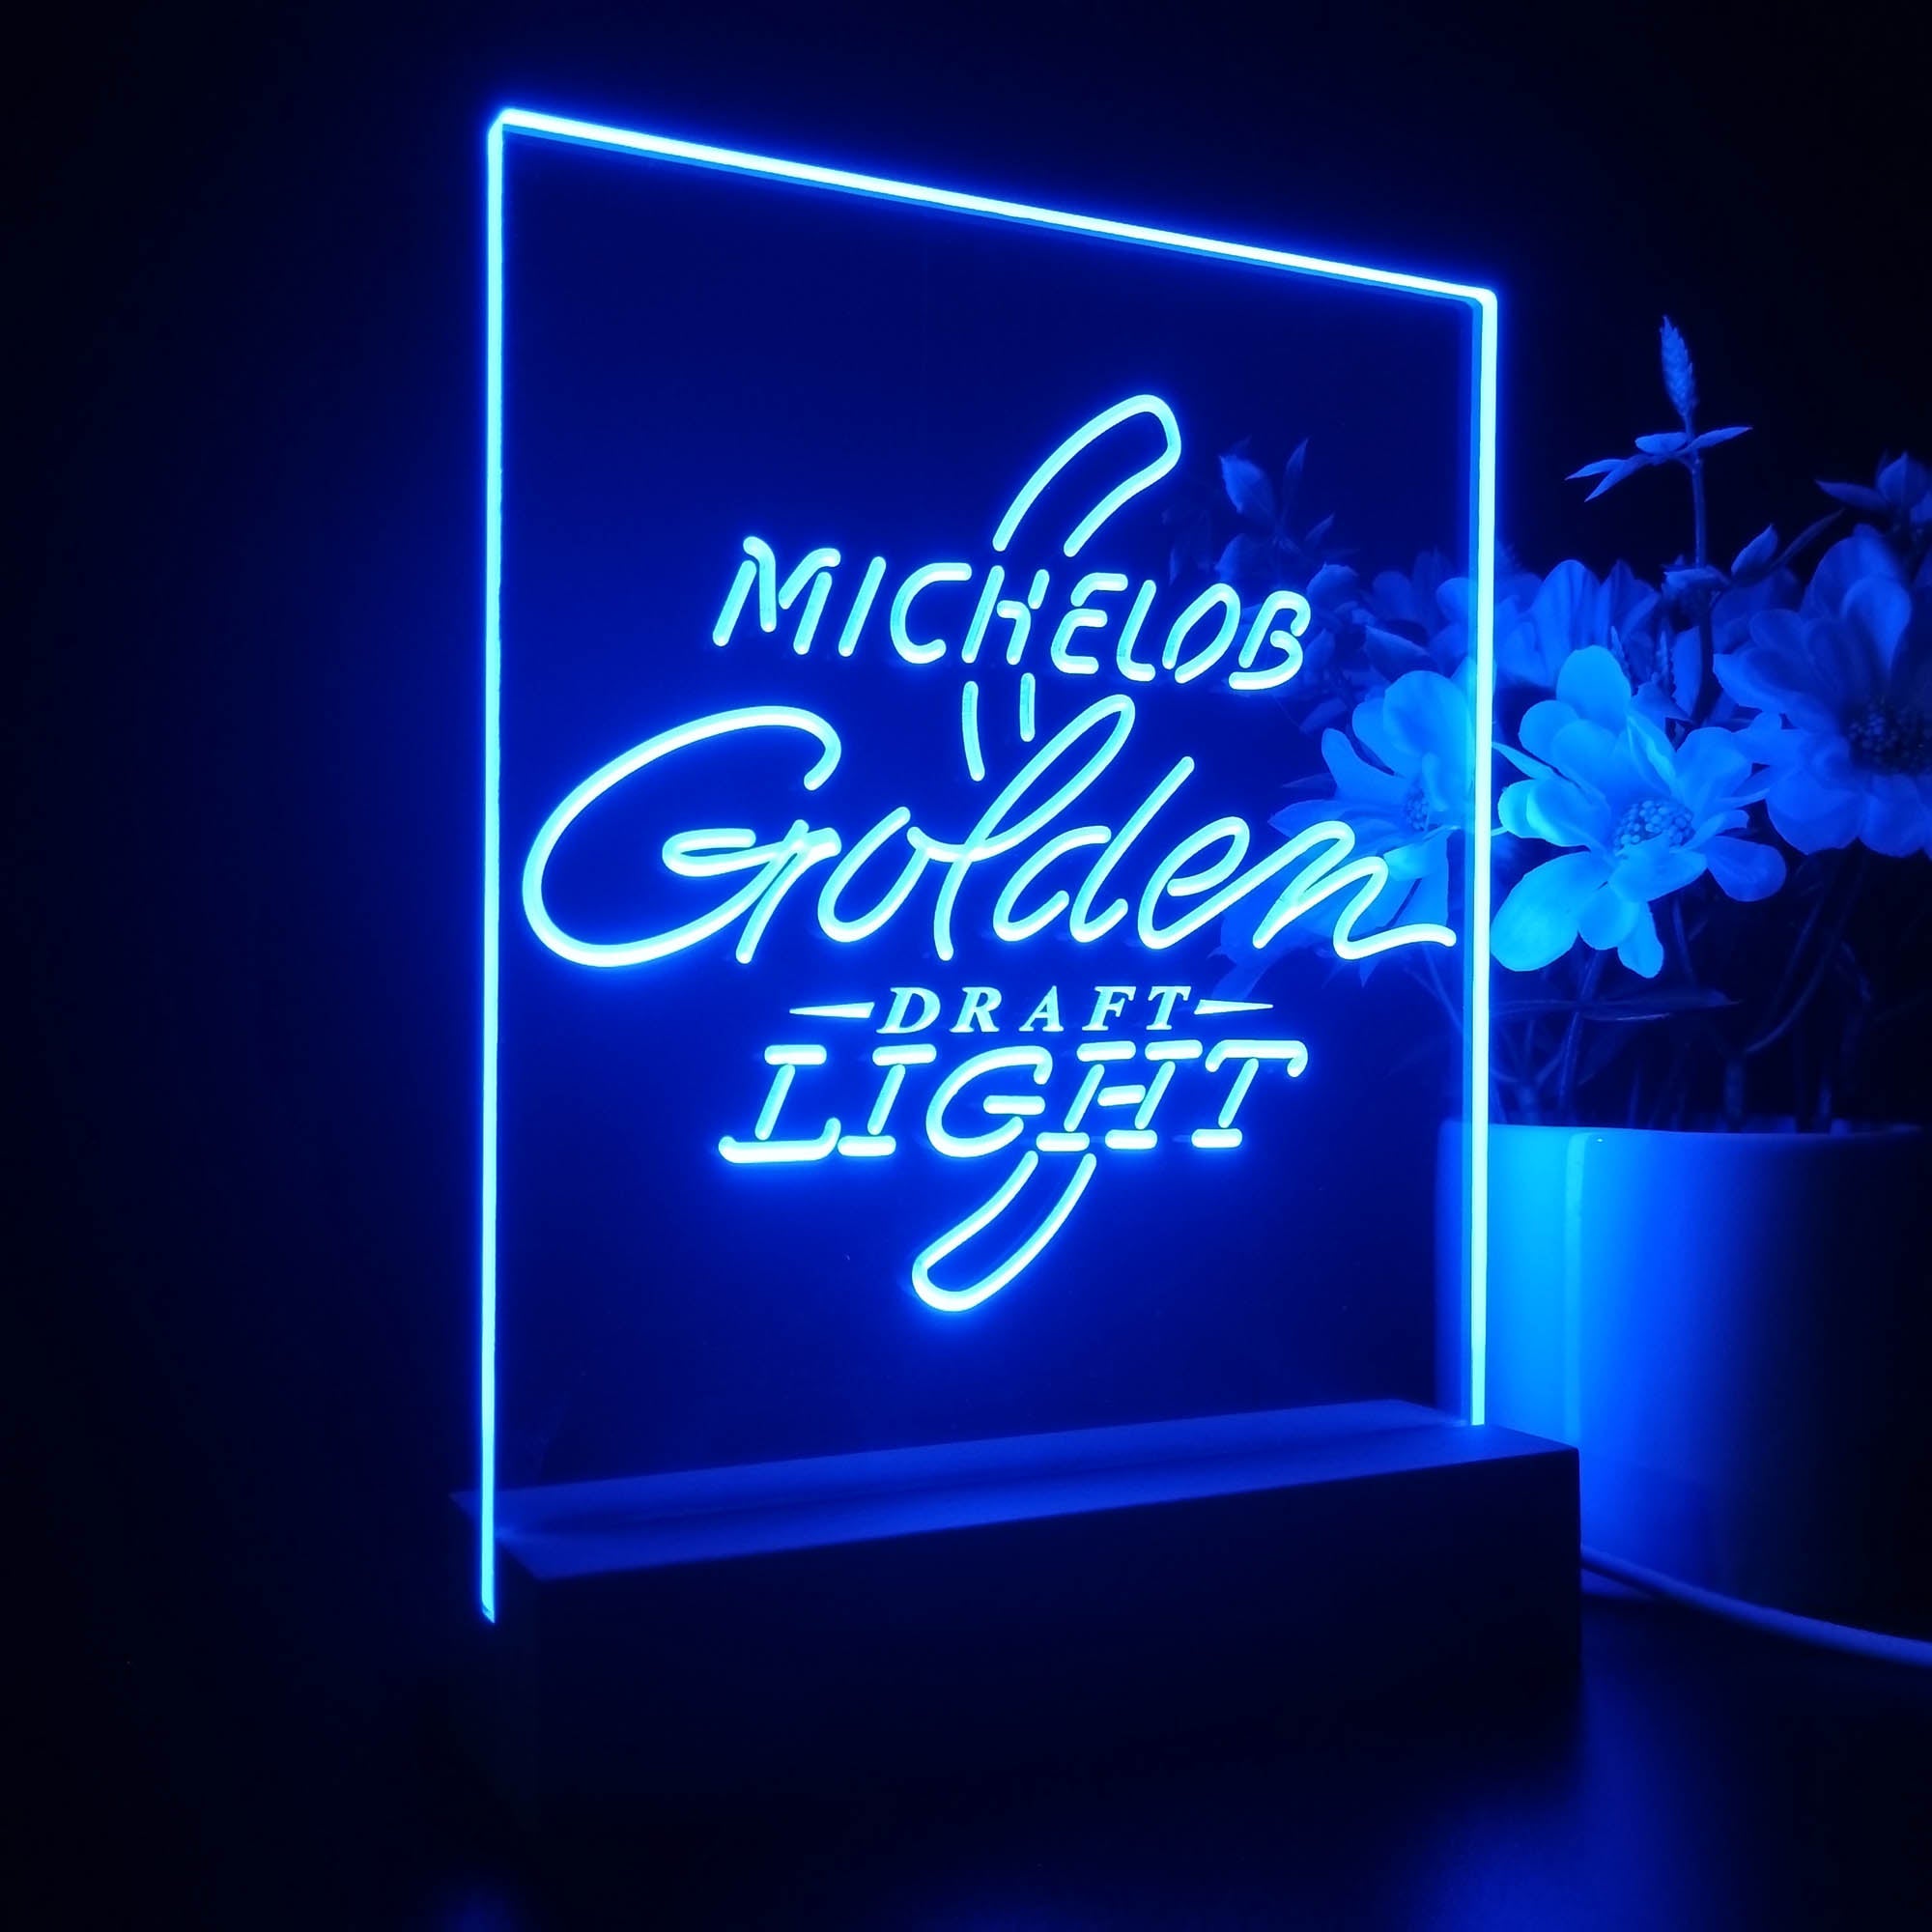 Michelob Golden Light Draft Night Light LED Sign